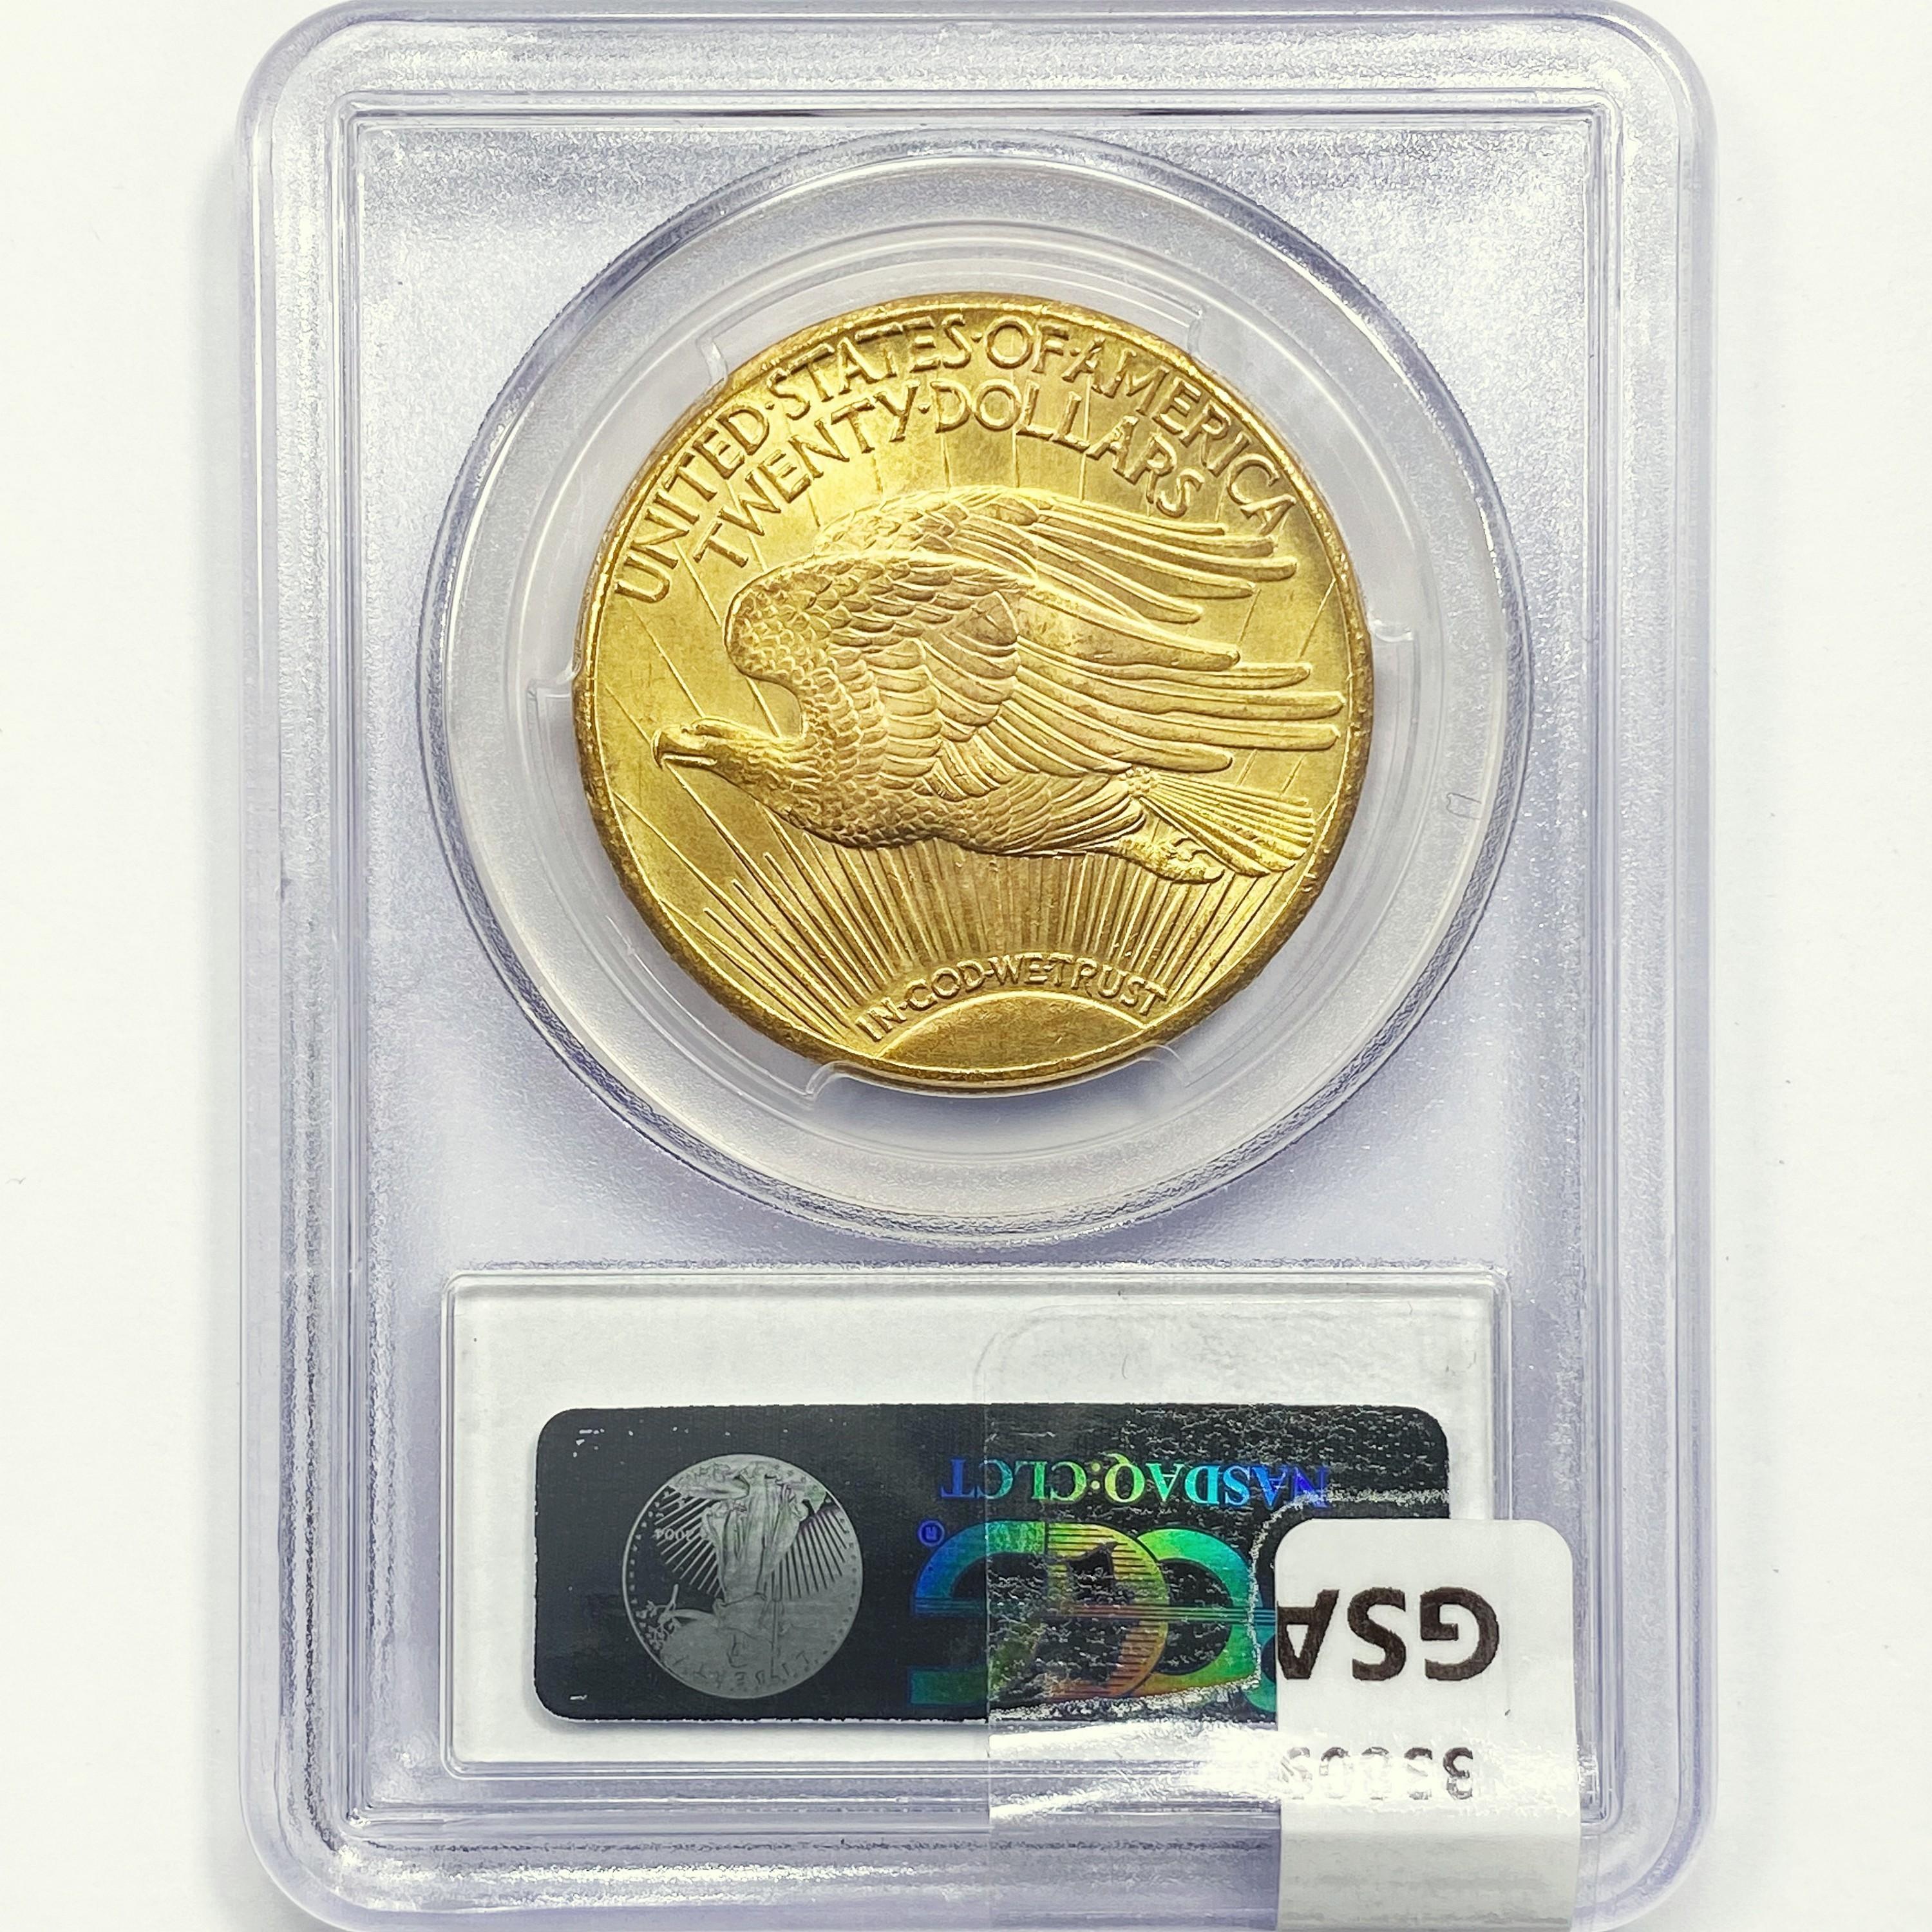 1924 $20 Gold Double Eagle PCGS MS66